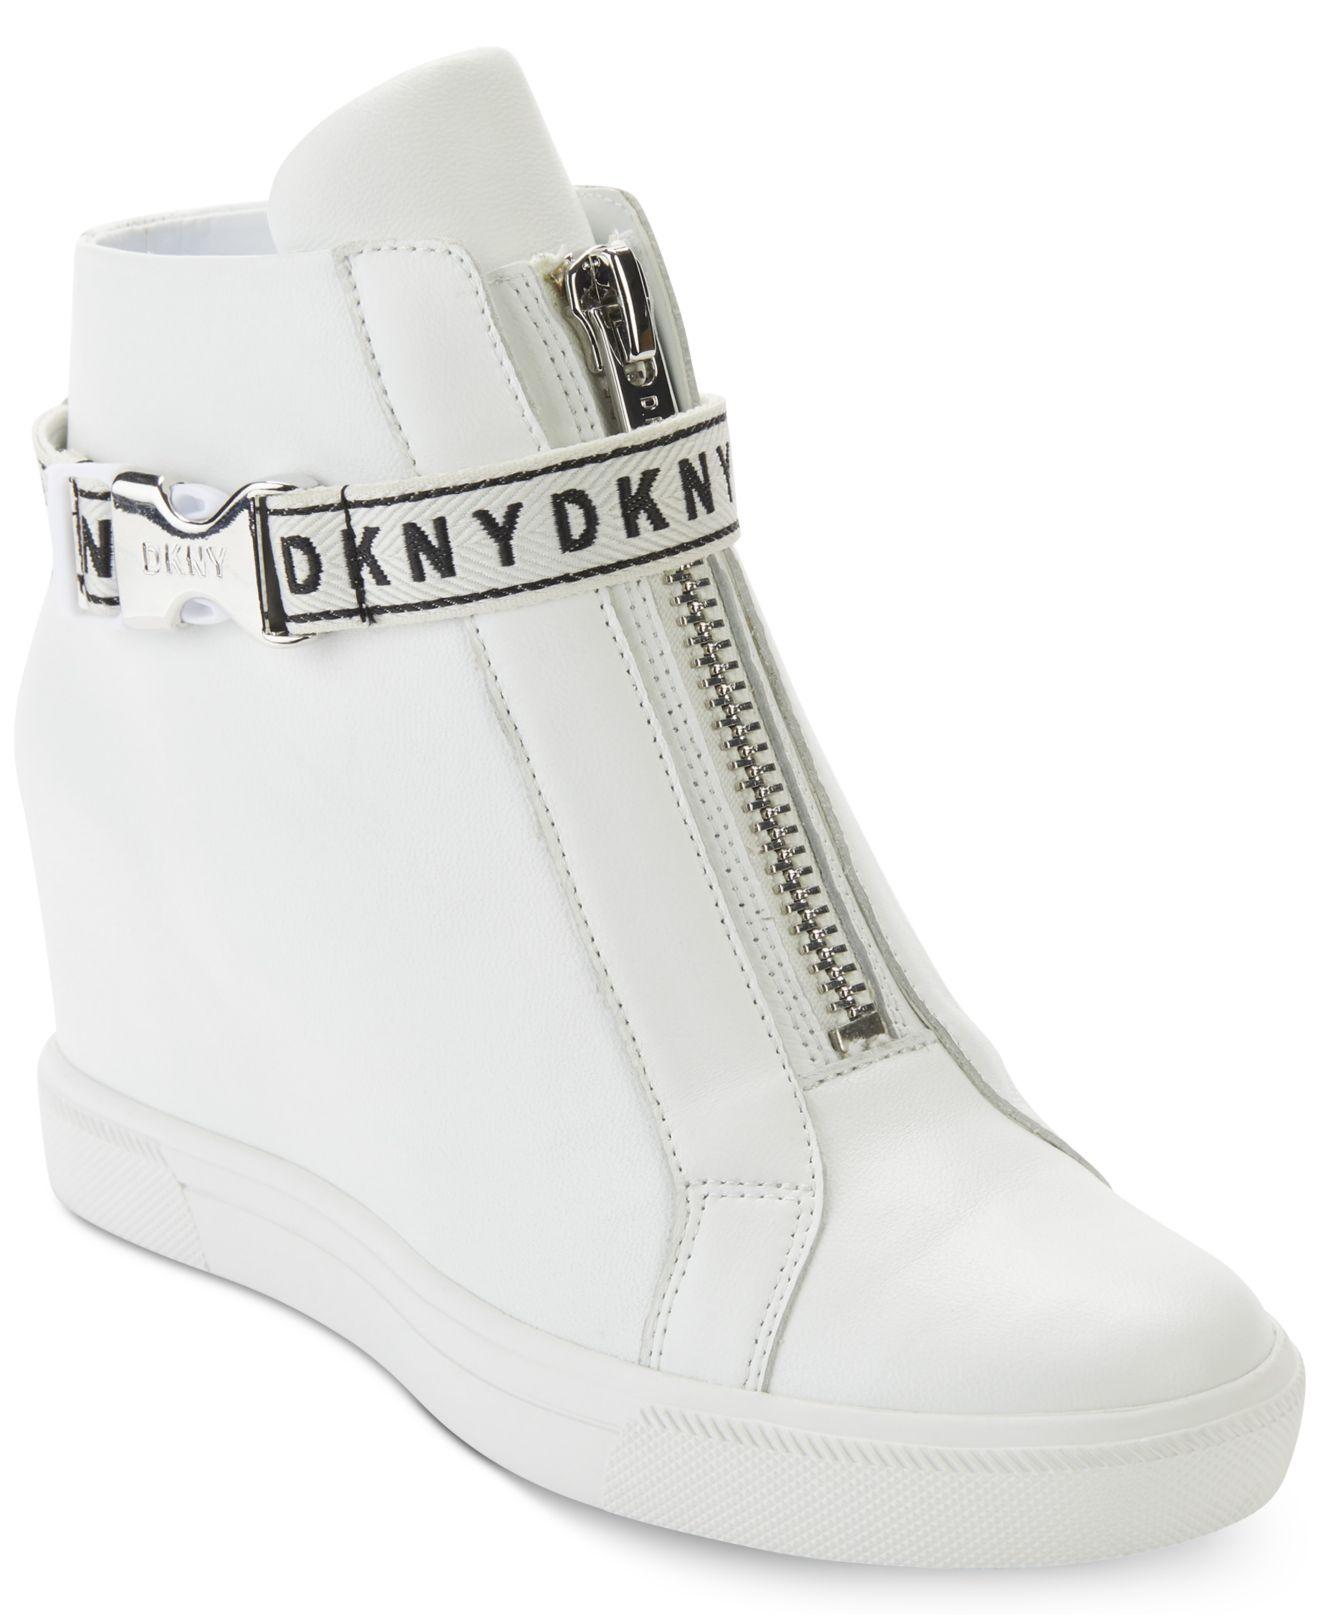 Dkny Caddie Wedge Sneakers Outlet | bellvalefarms.com